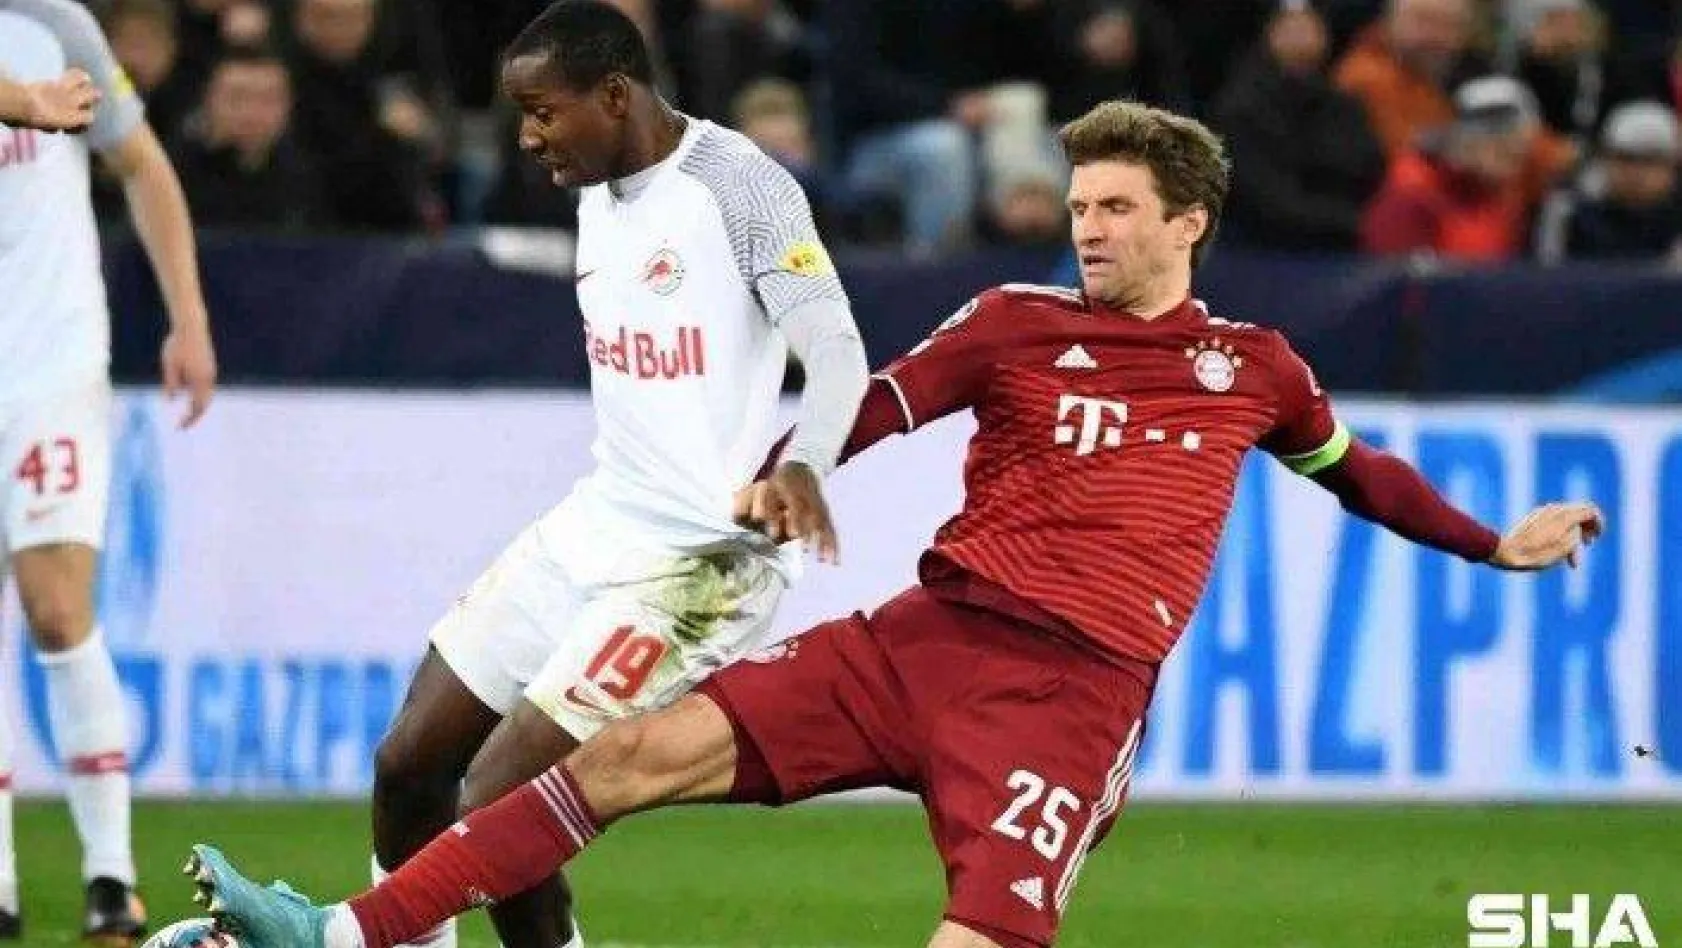 Bayern Münih, Salzburg'la yenişemedi